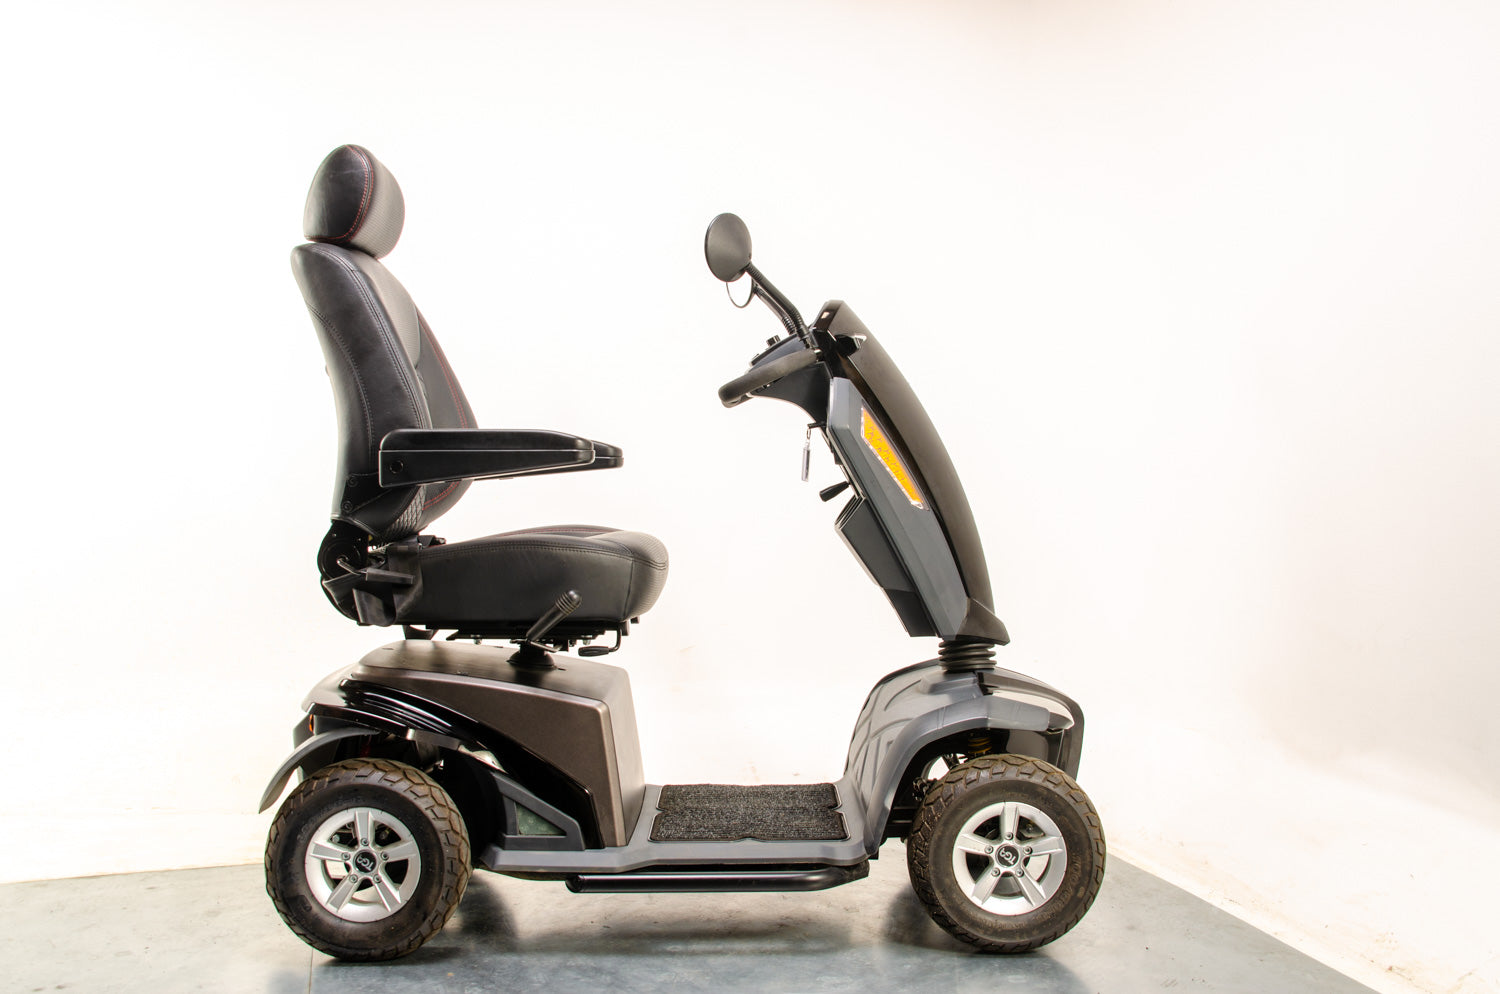 TGA Vita E 8mph Midsize Mobility Scooter